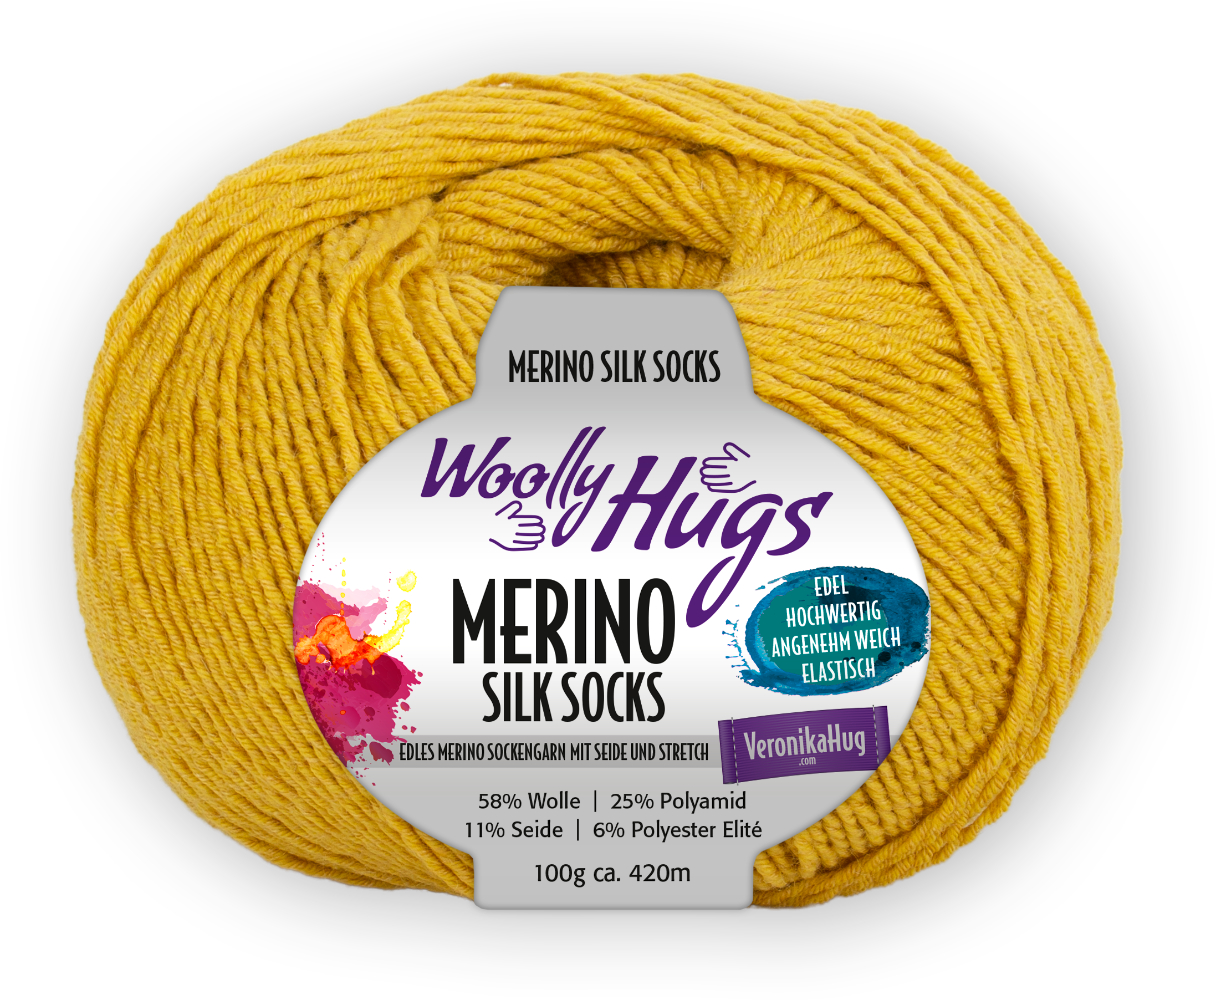 Merino Silk Socks Stretch, 4-fach von Woolly Hugs 0223 - curry